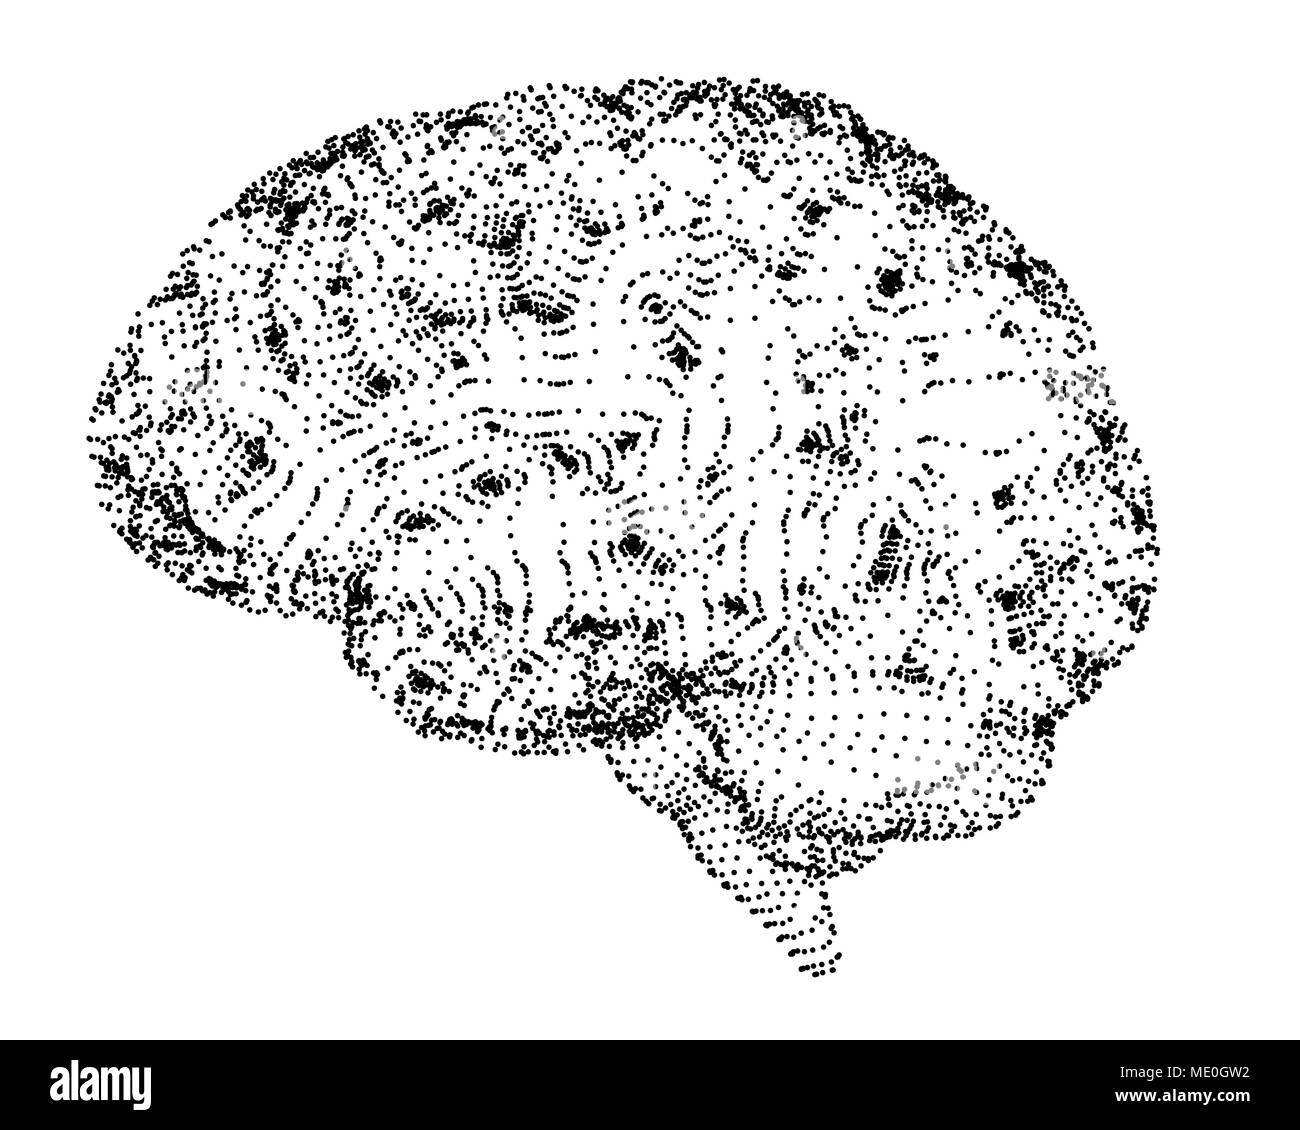 Human brain, conceptual illustration. Stock Photo